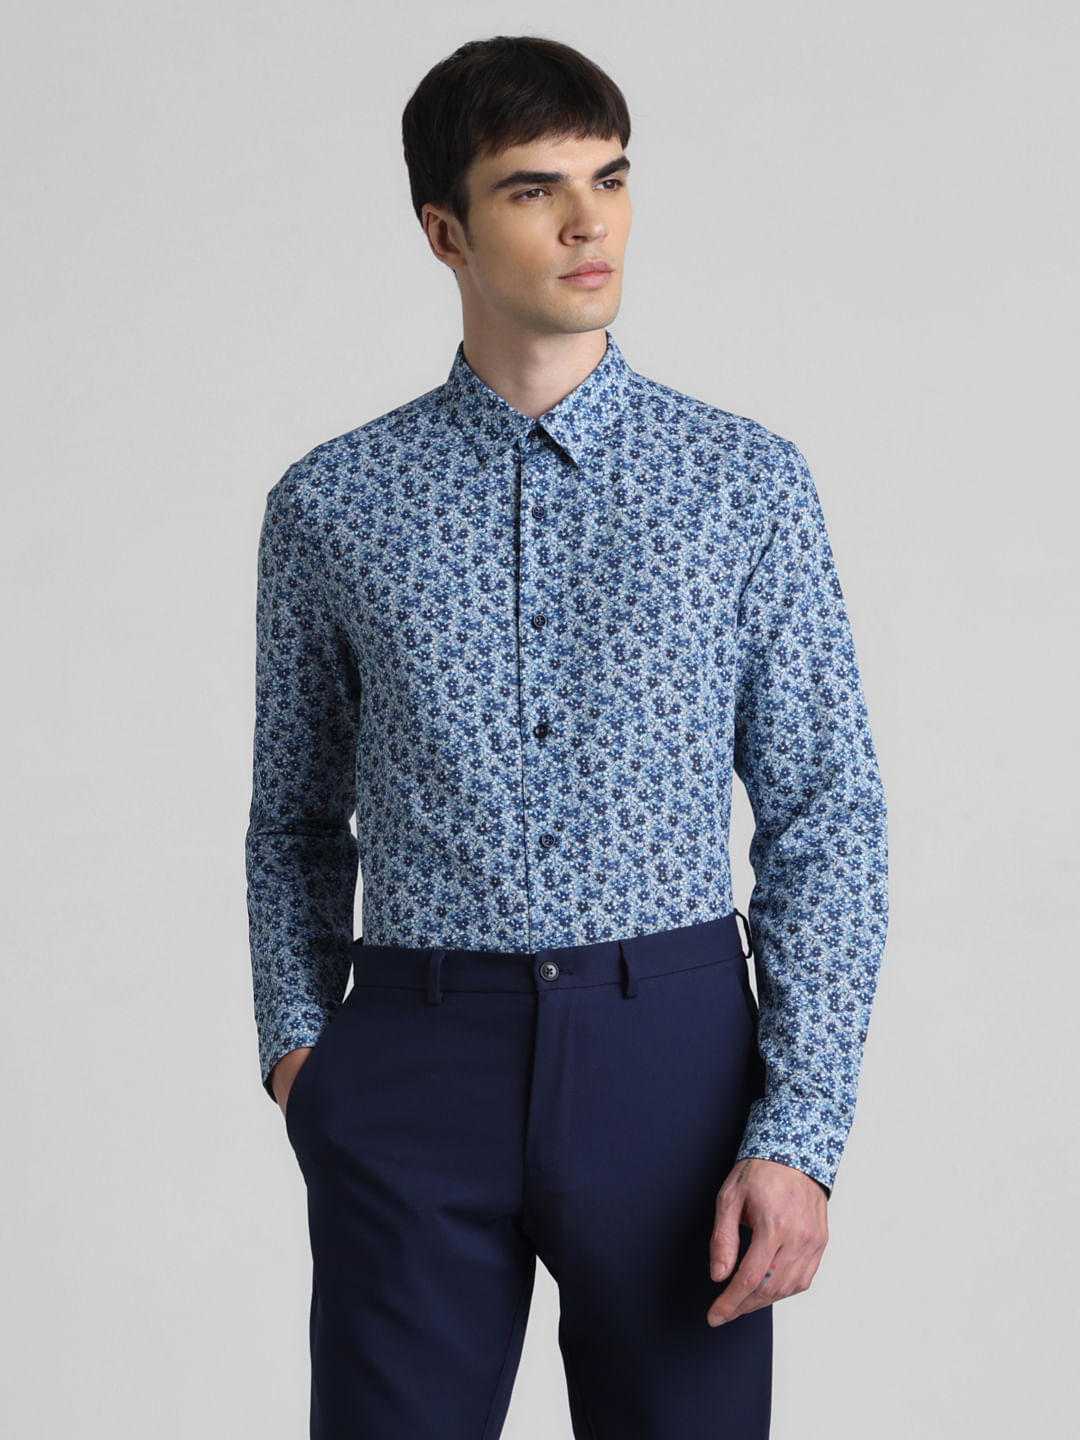 Tericot Blue(Shirt),Black(Pant) Cotton Plain Corporate Uniform at Rs  450/set in Mumbai